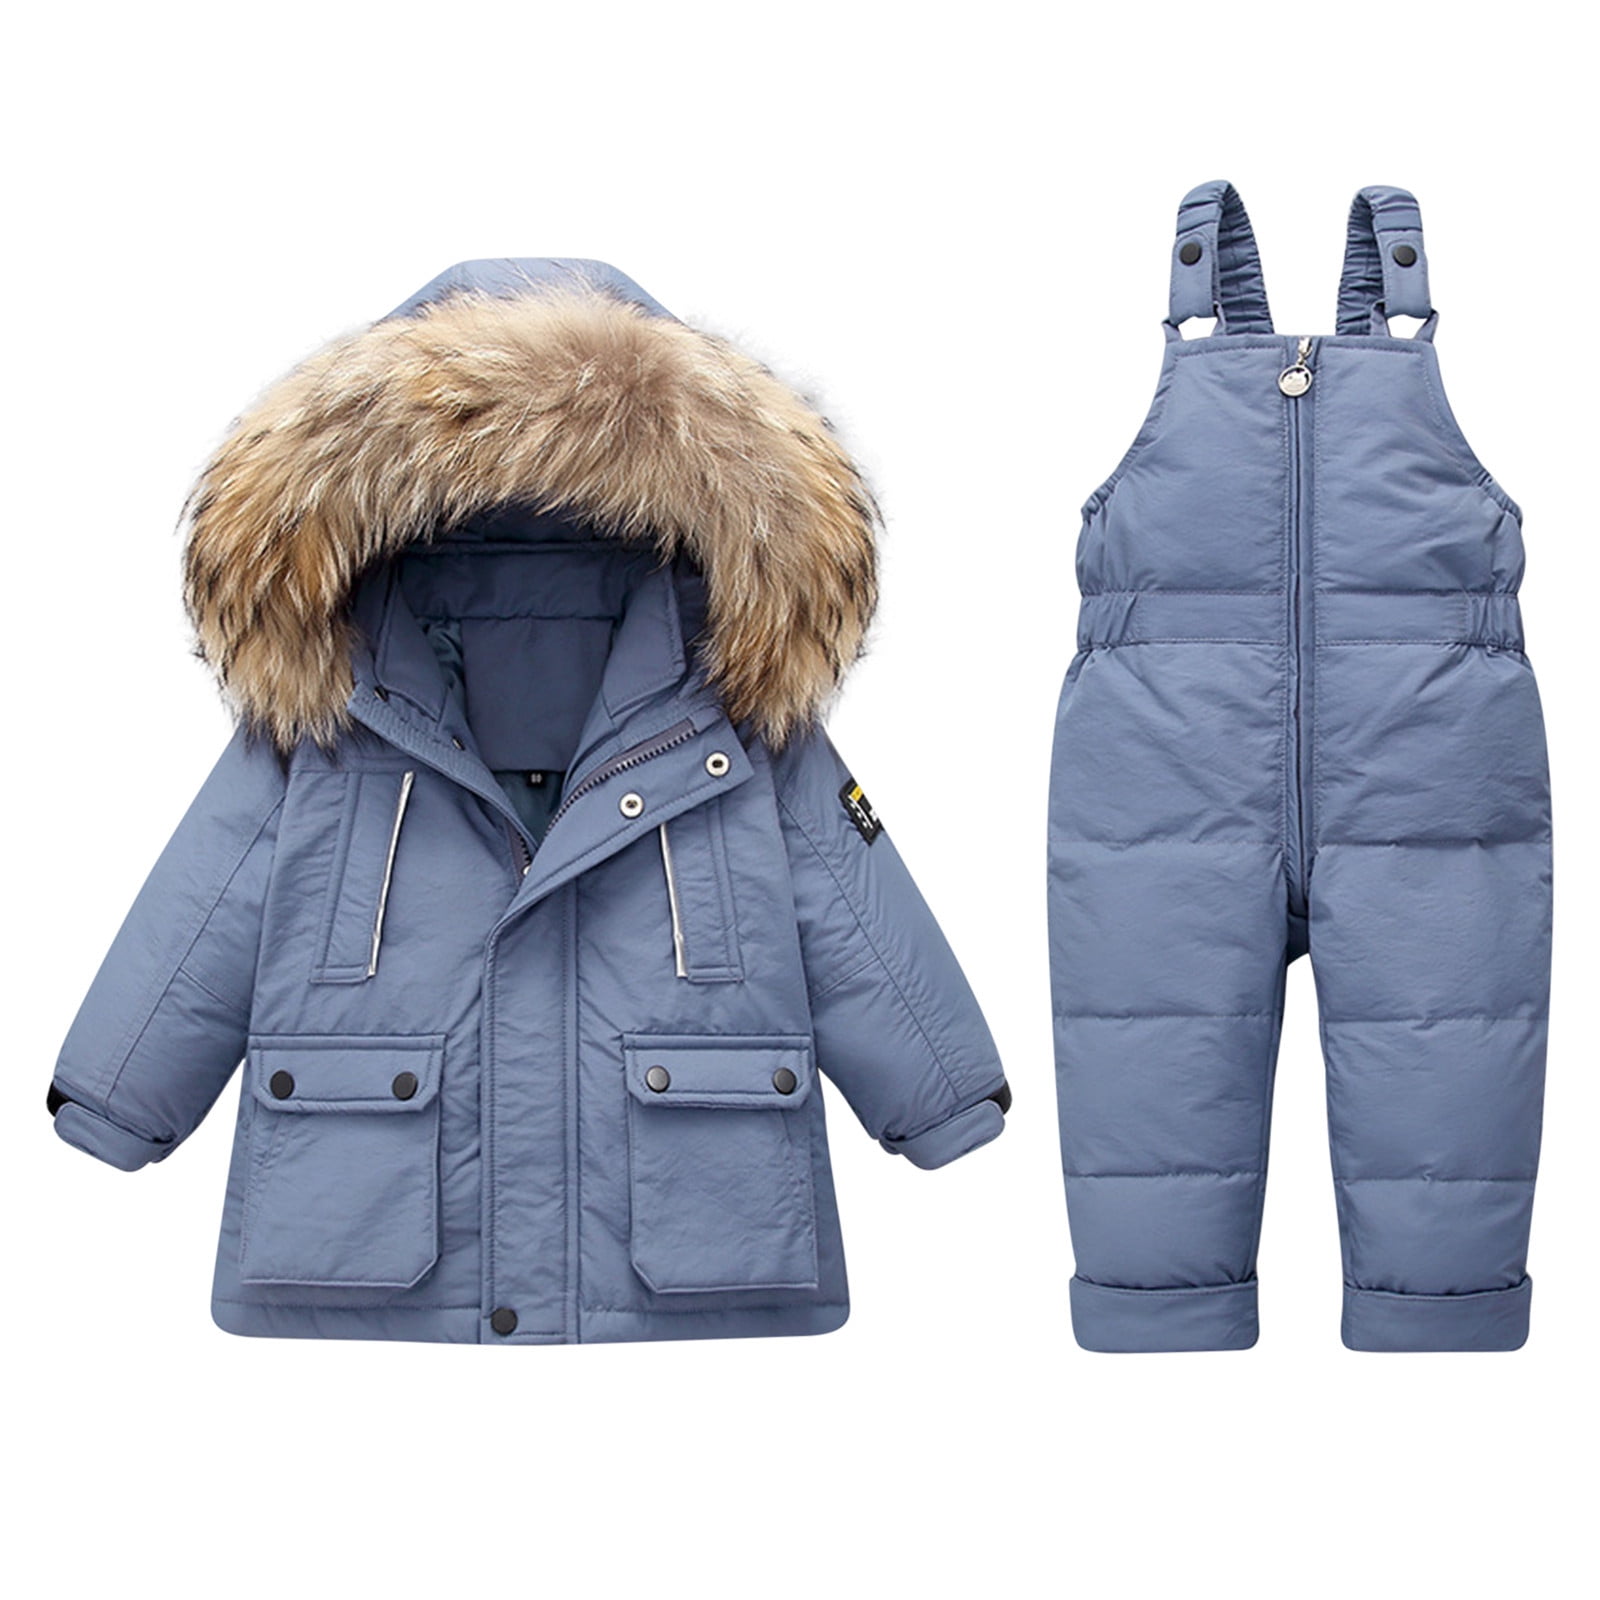 Kids 2-Piece Snowsuit Set Winter Hooded Puffer Jacket and Snow Bib ...